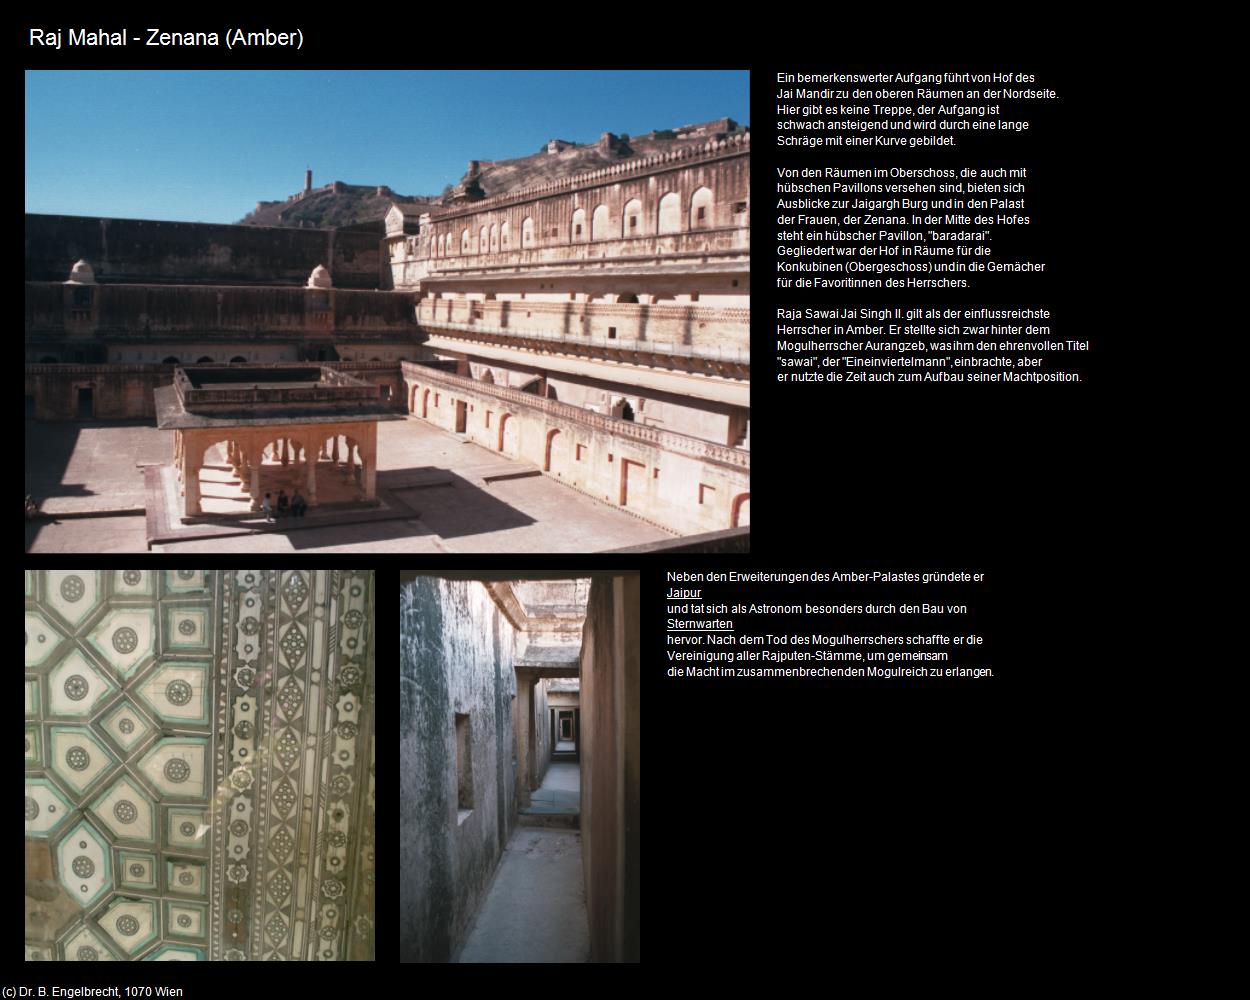 Raj Mahal - Zenana (Amer bei Jaipur) in Rajasthan - das Land der Könige(c)B.Engelbrecht